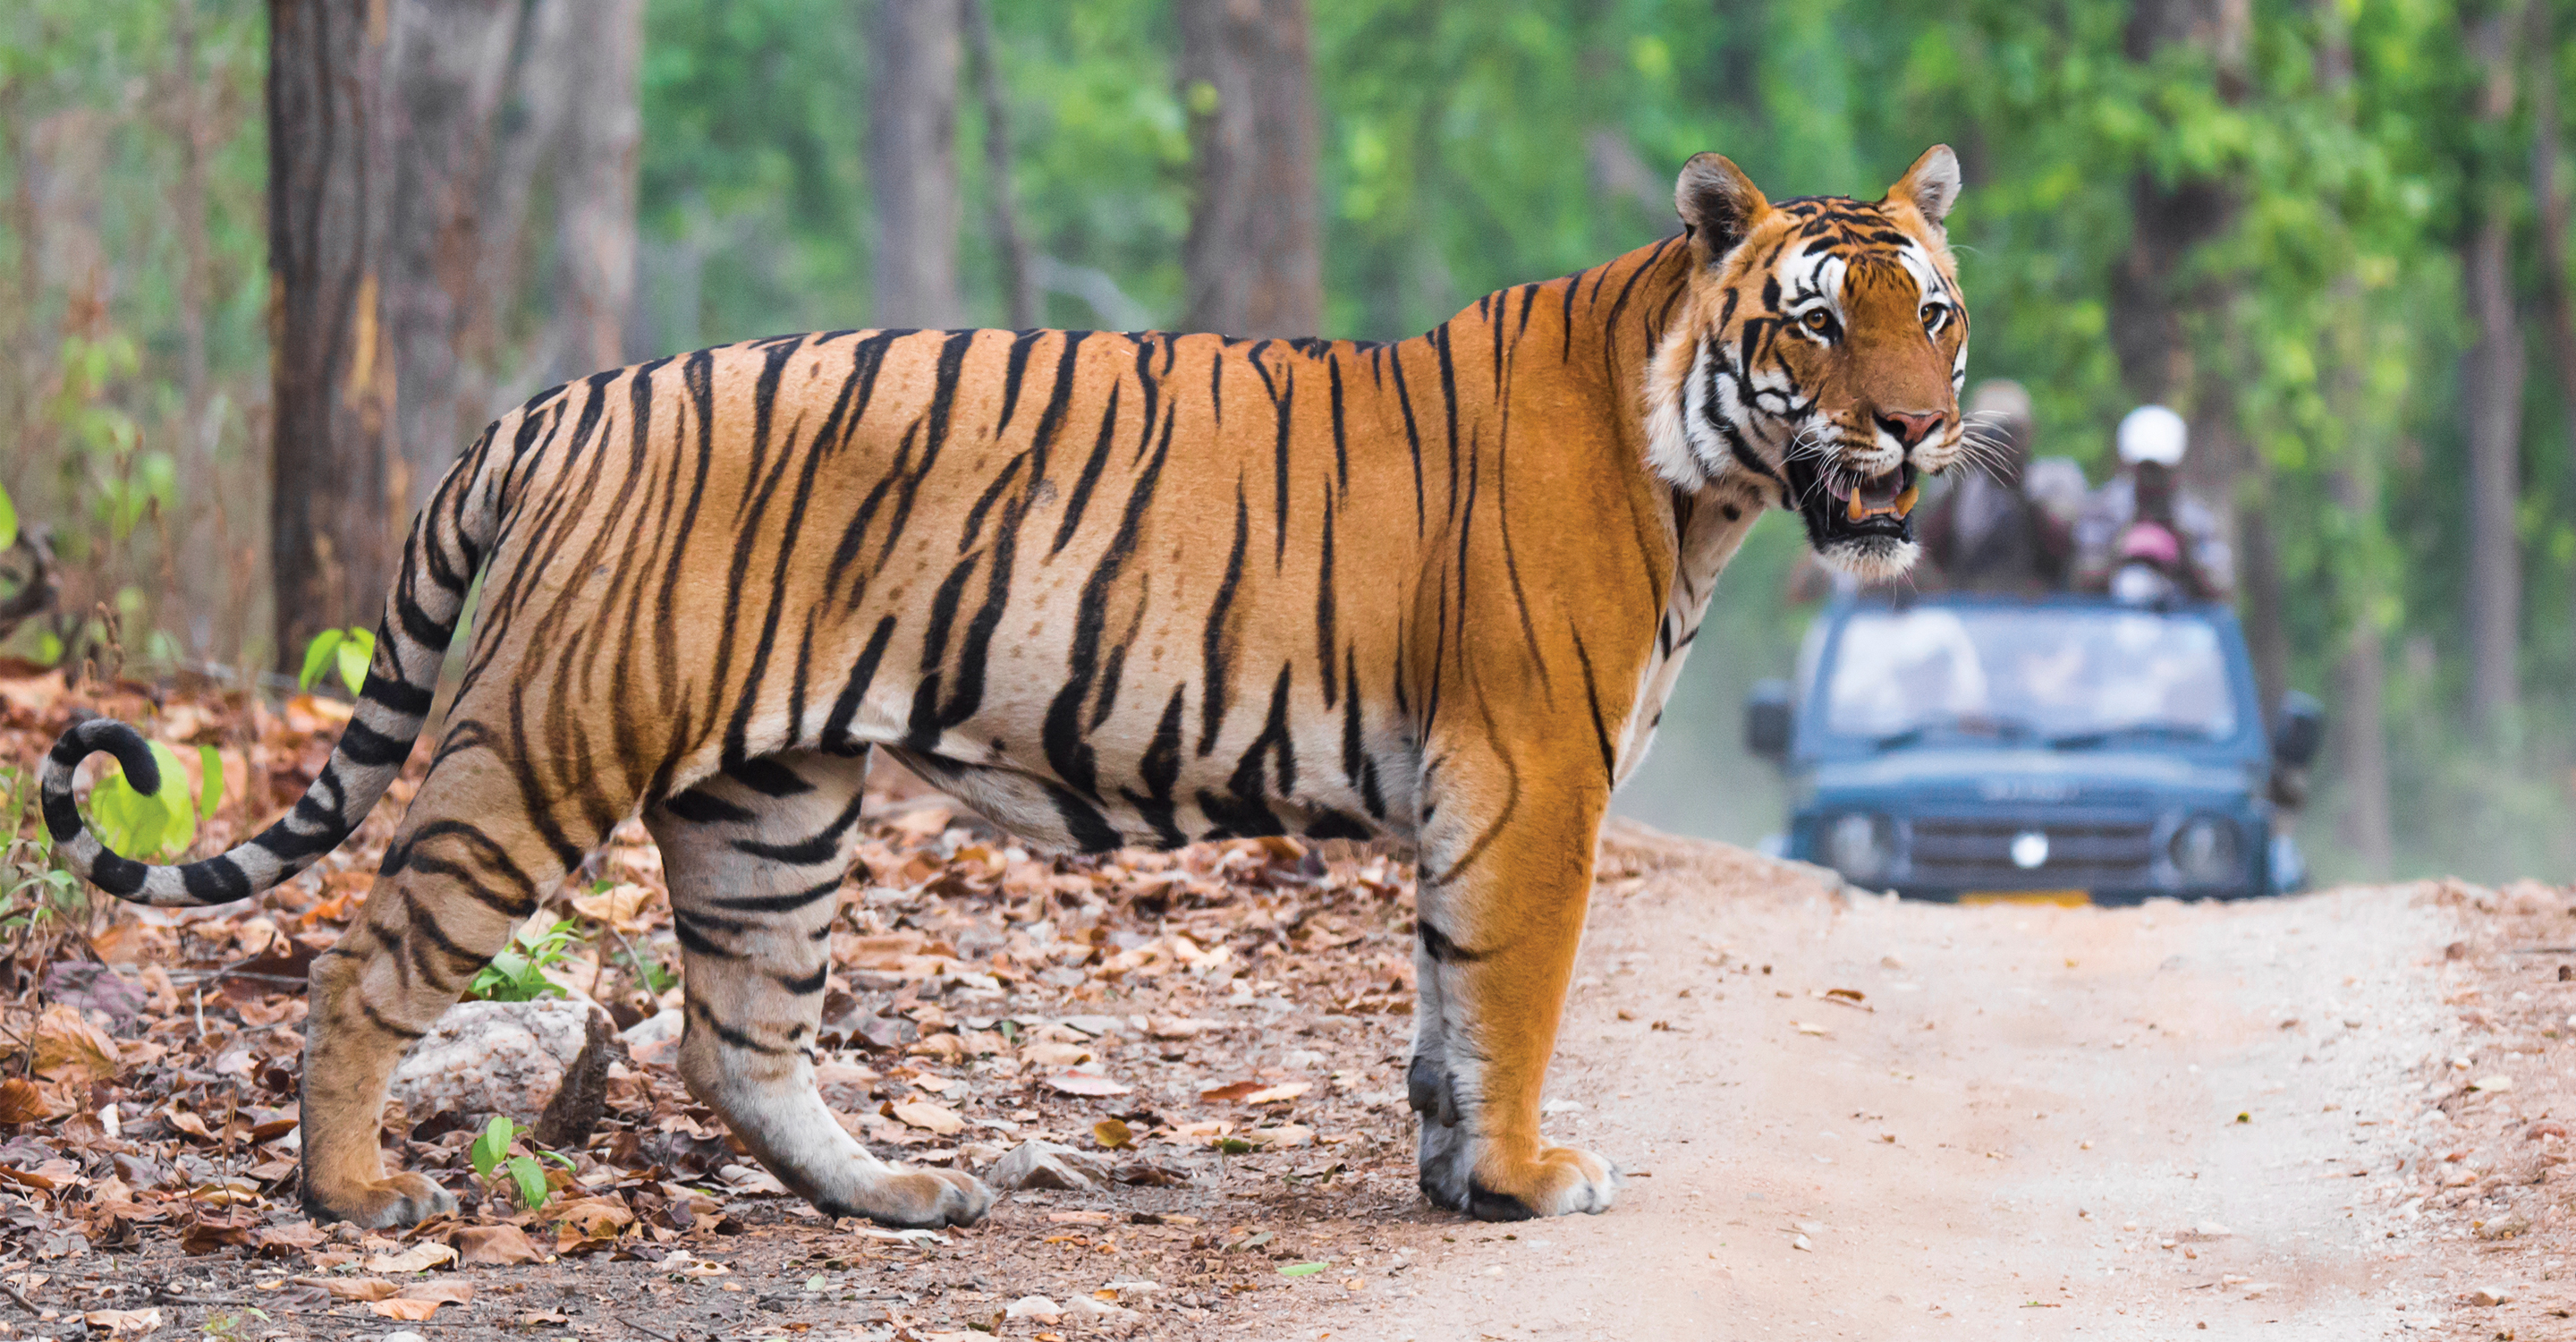 A tiger surveys his surroundings as it crosses a dirt road near a safari vehicle in Ranthambore National Park, India